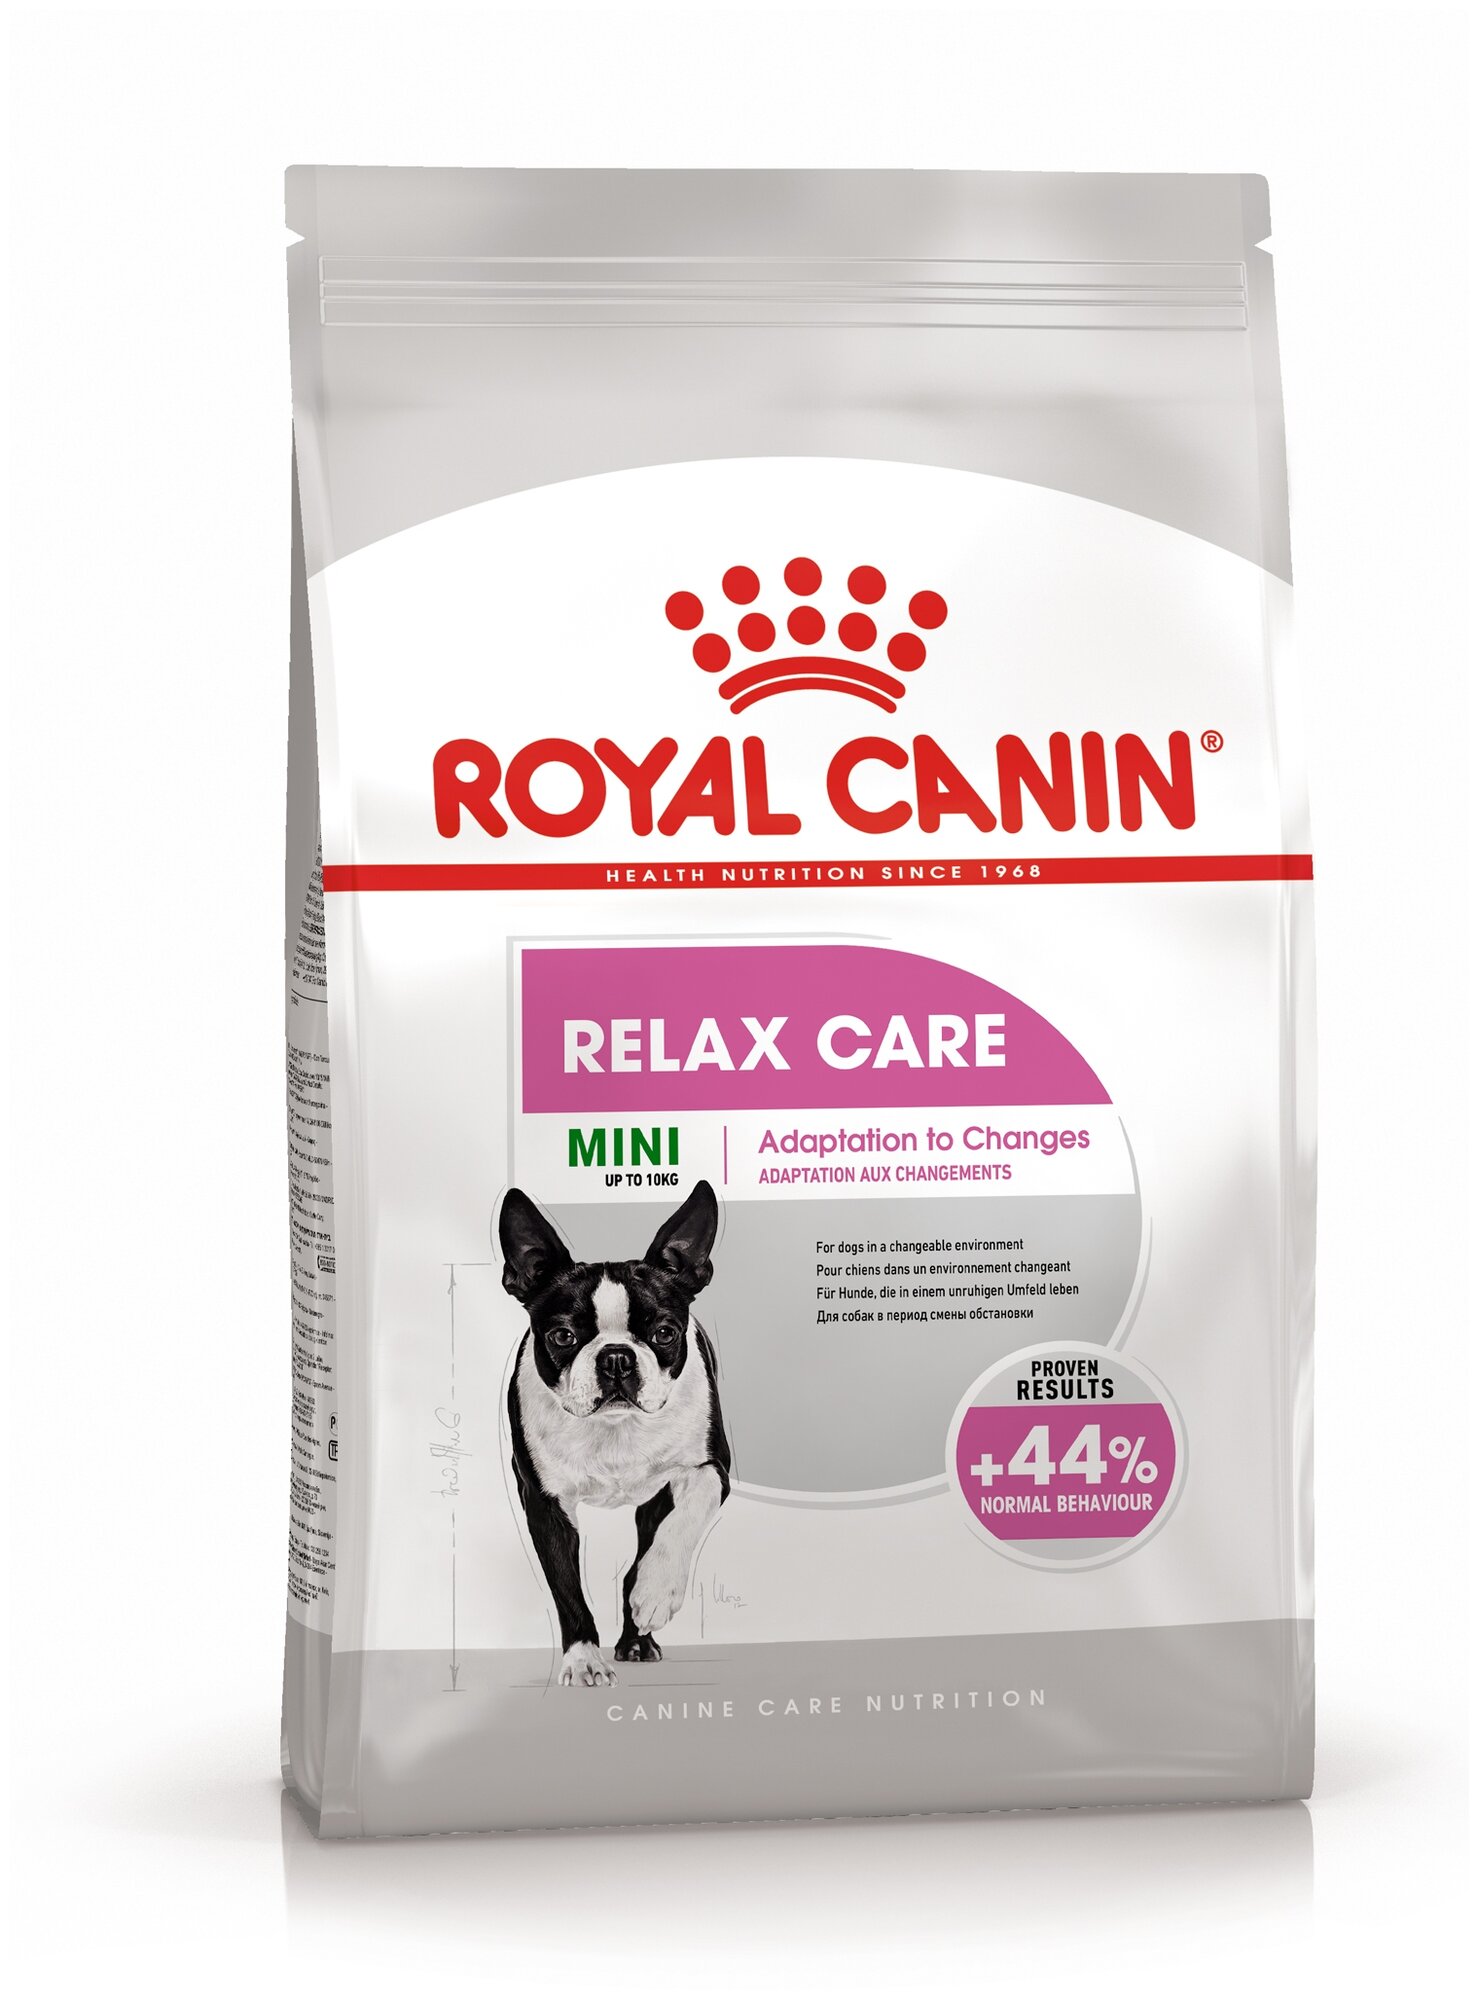 Royal Canin ВВА RC Для собак подверженных стрессовым факторам (Mini Relax Care) 12240100P012240100F0 | Mini Relax Care 1 кг 36088